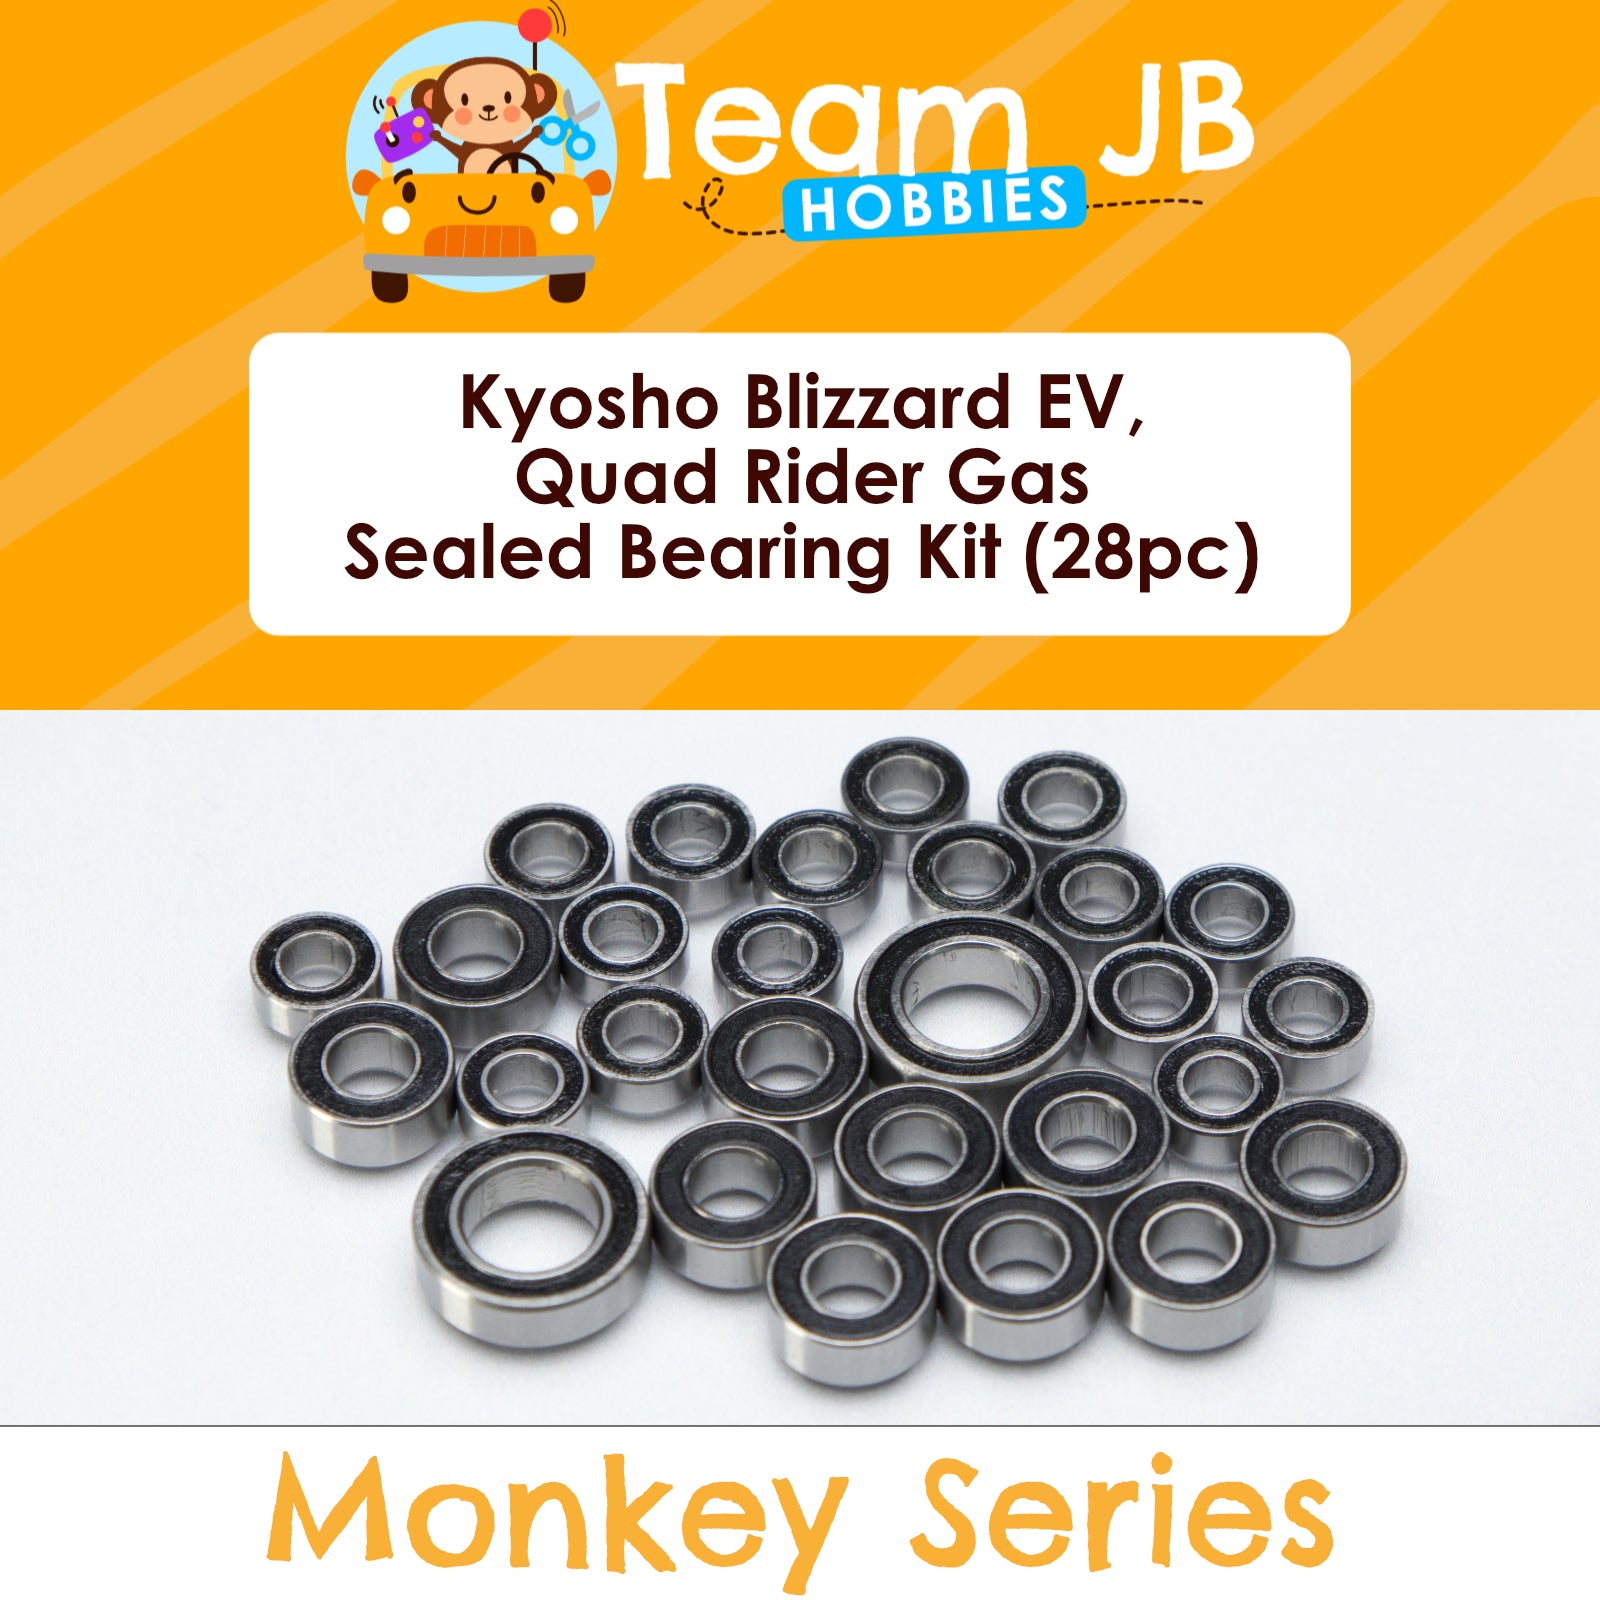 Kyosho Blizzard EV, Quad Rider Gas - Sealed Bearing Kit